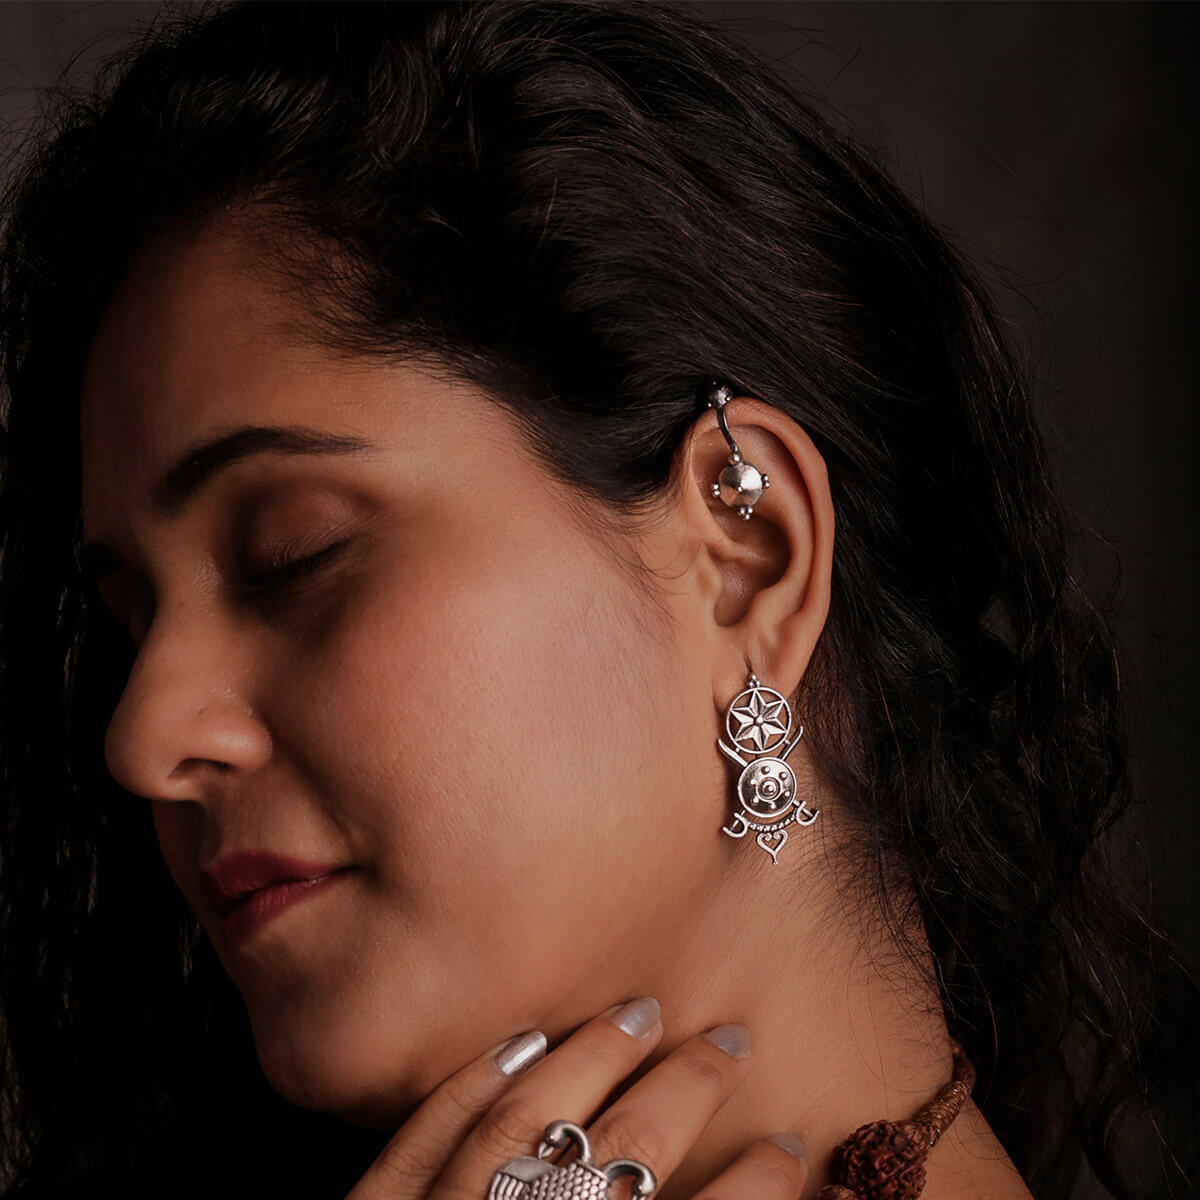 Ear Cuff - Buy Ear Cuffs Earrings online at Best Prices in India |  Flipkart.com